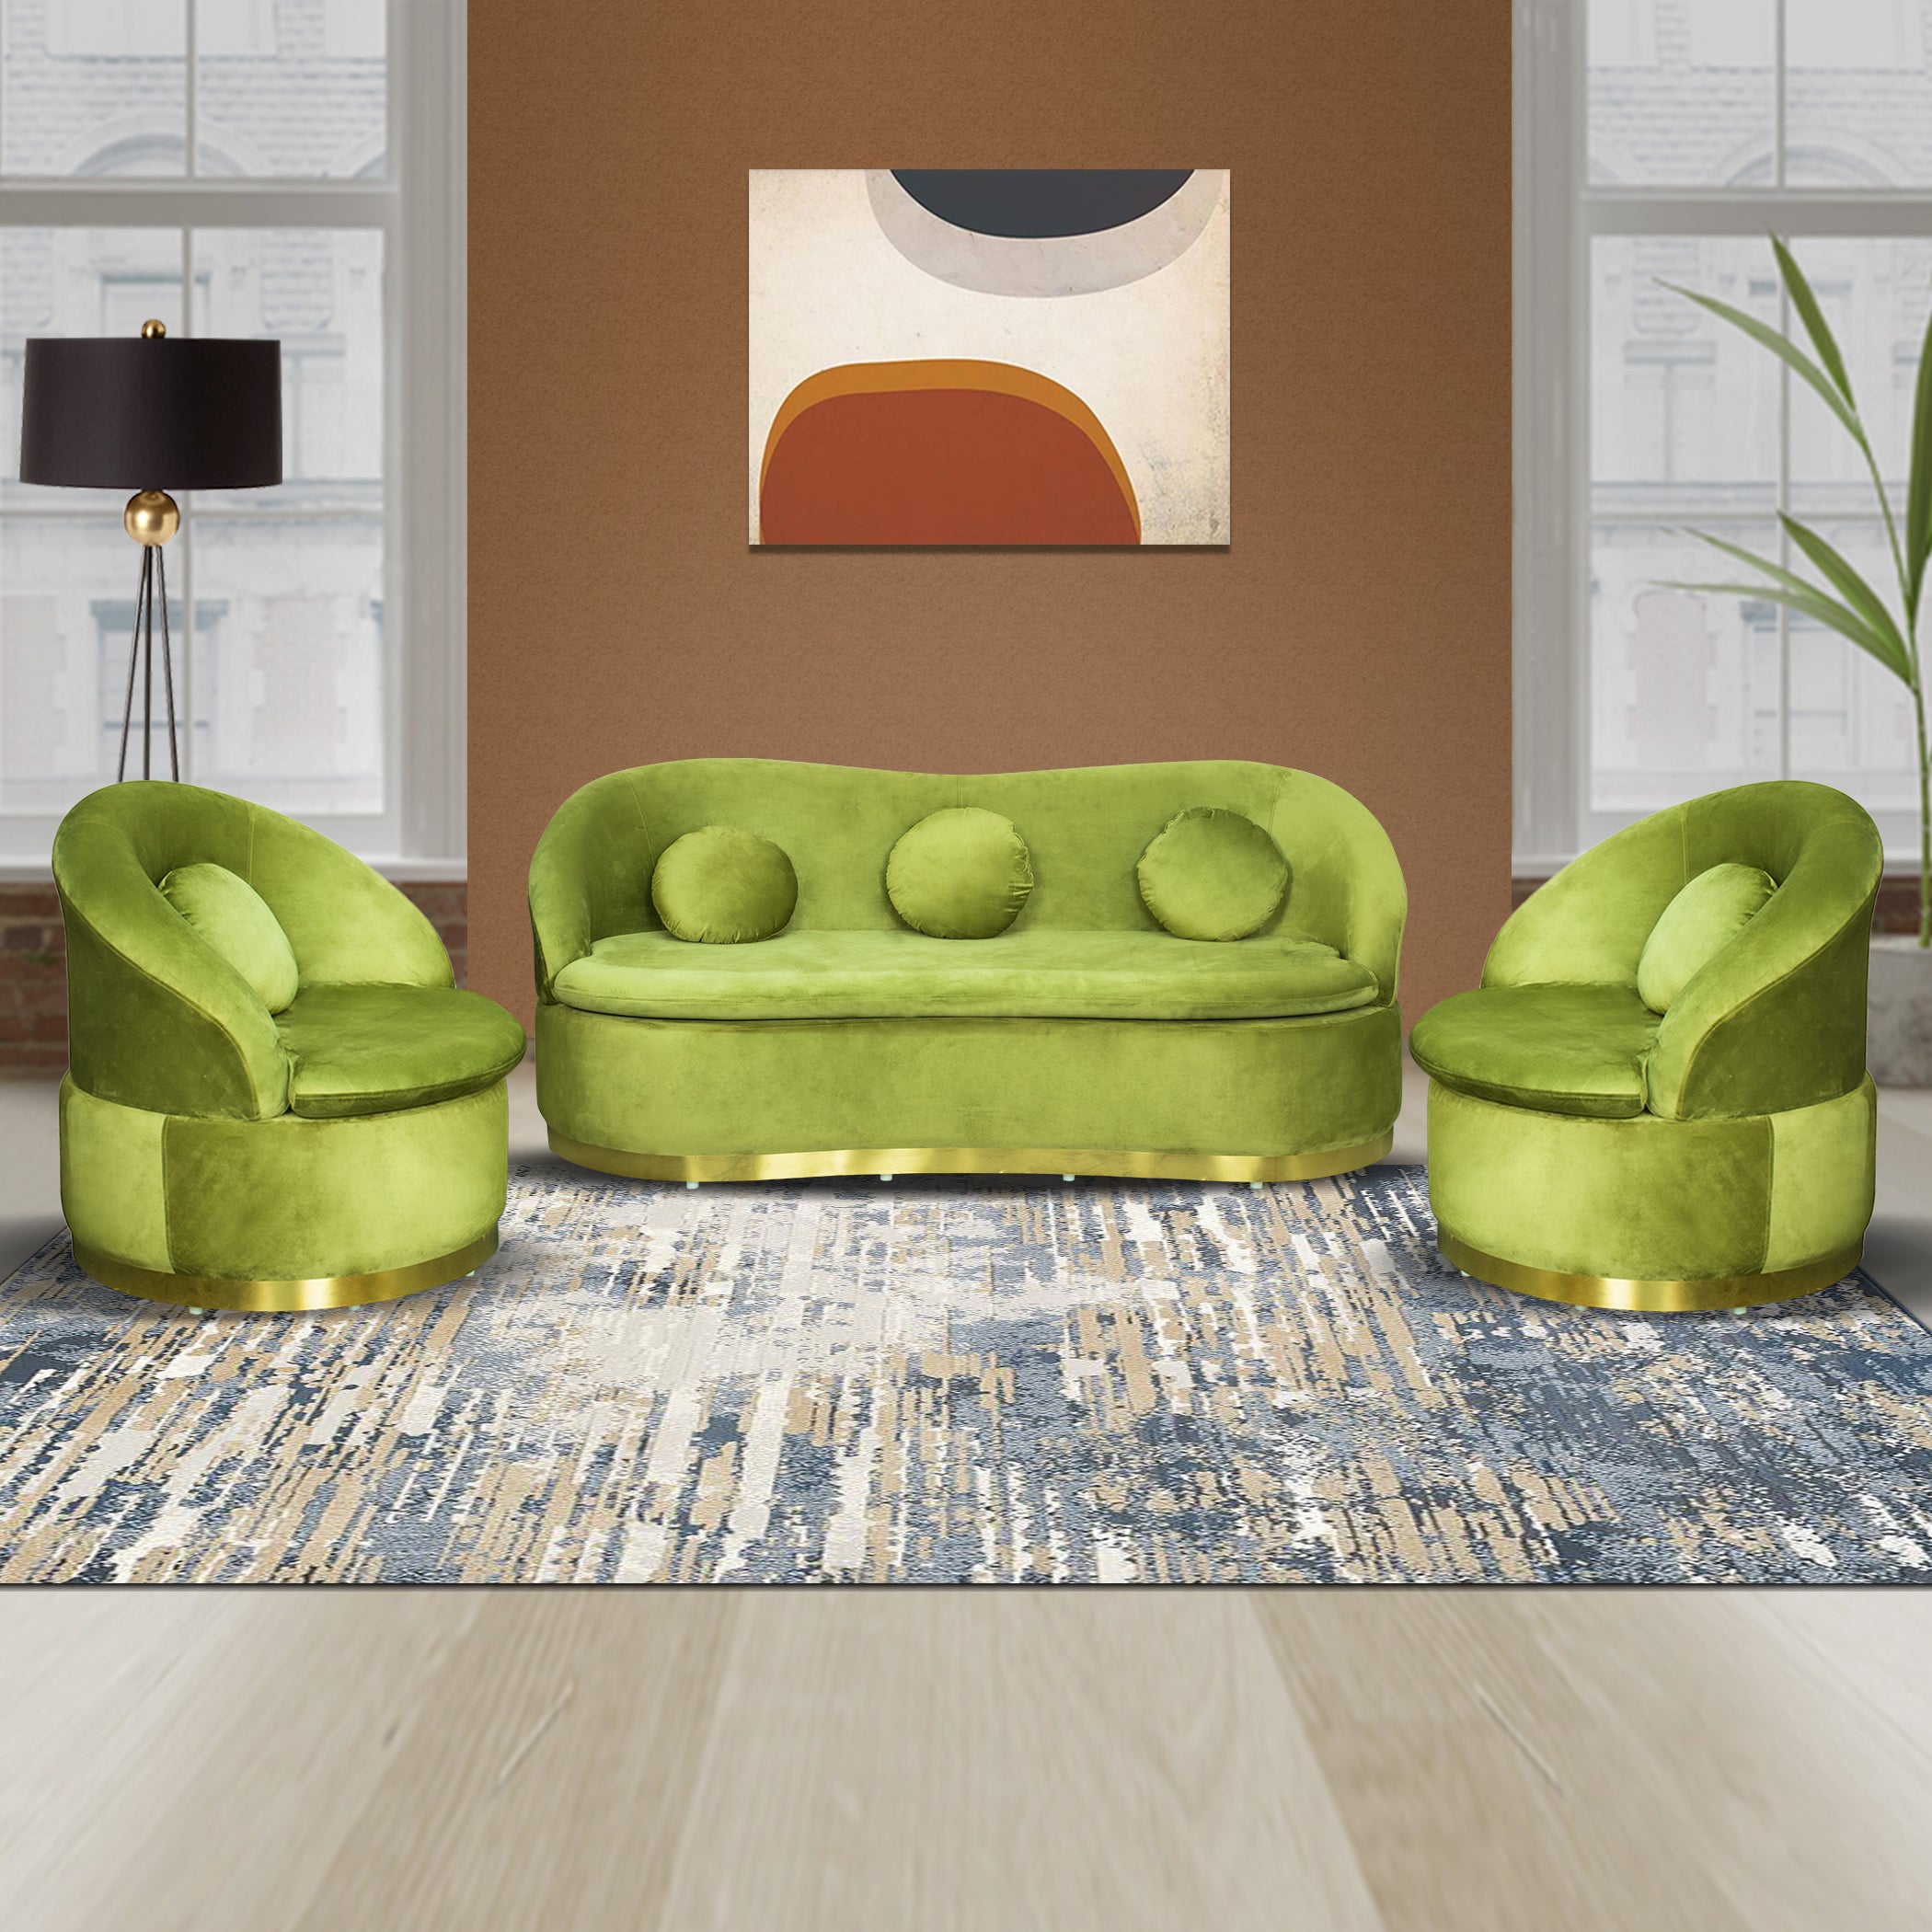 Pluto RoyalGreen 3S Sofa by Zorin Zorin